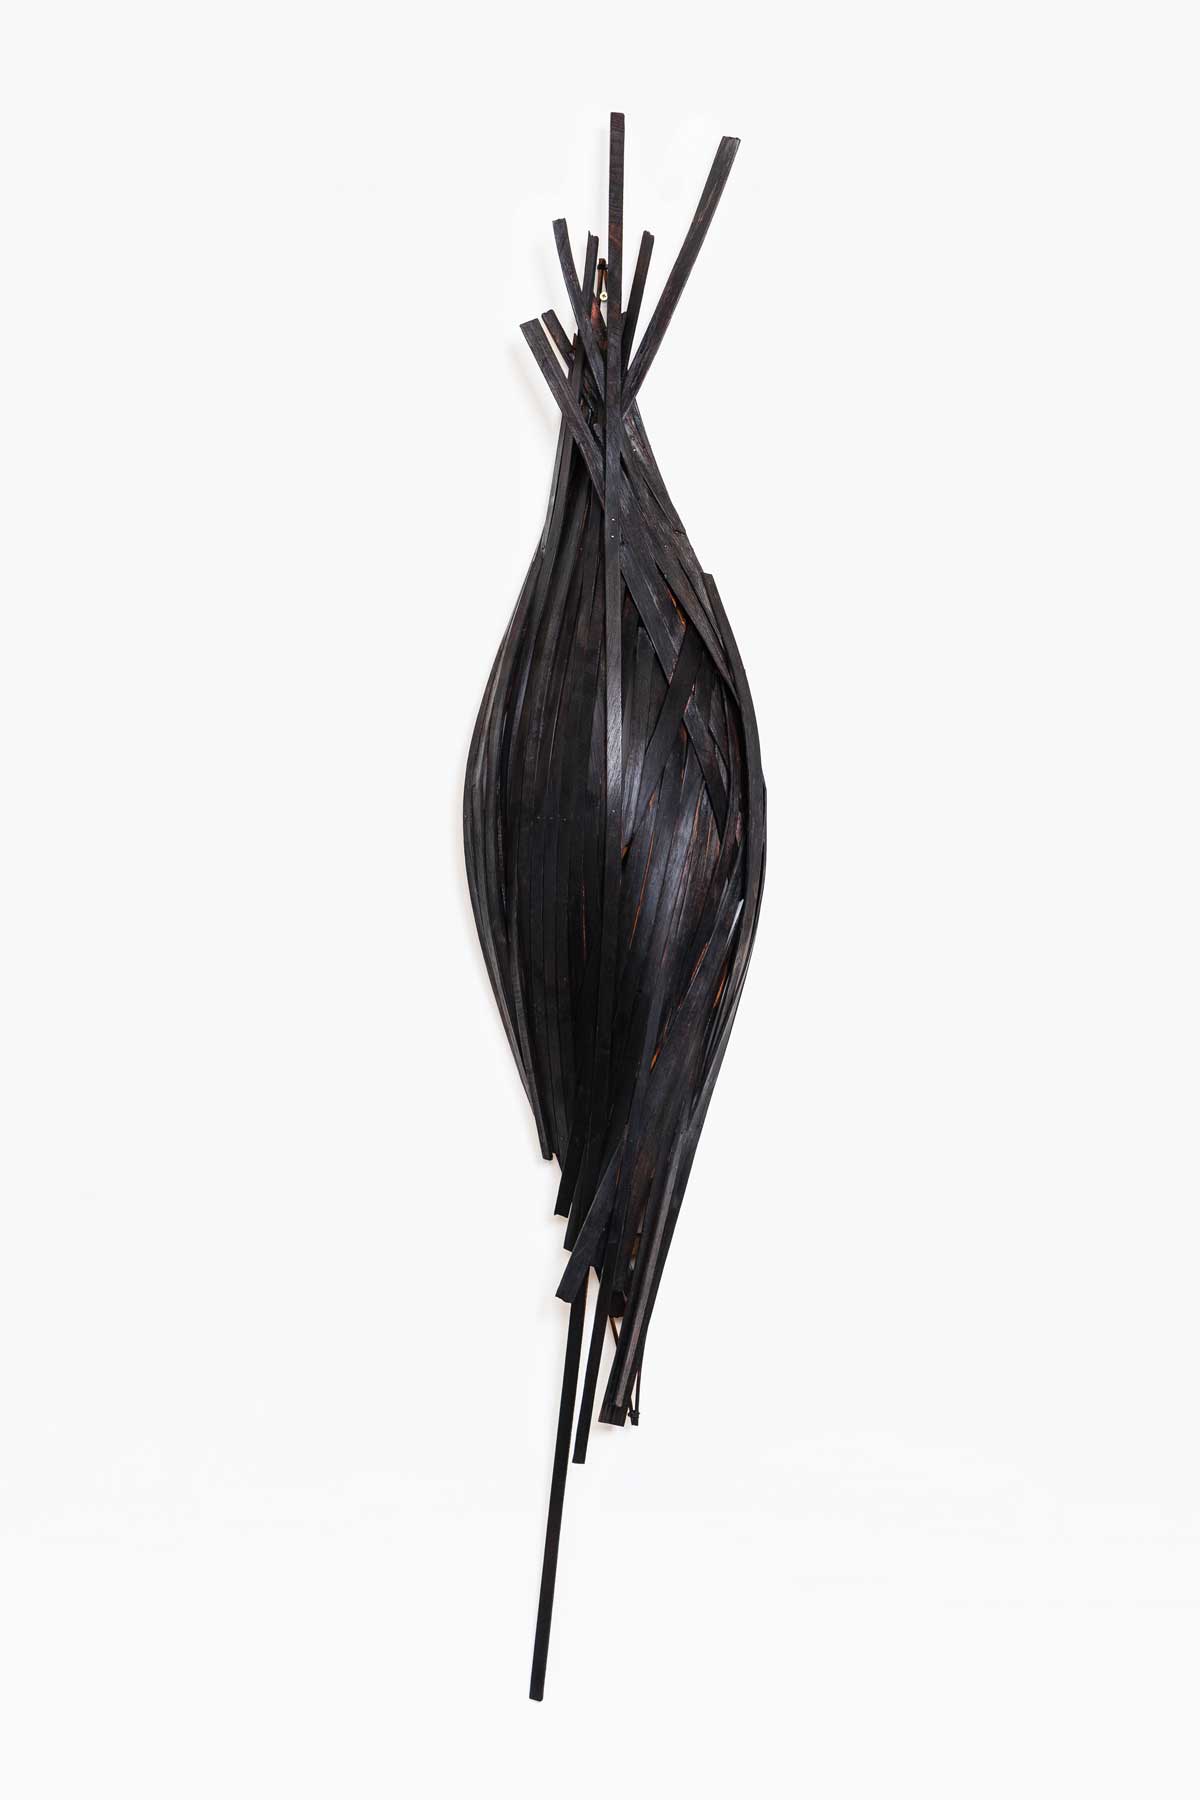 Bird in space by Luke Storrier at Olsen Gallery